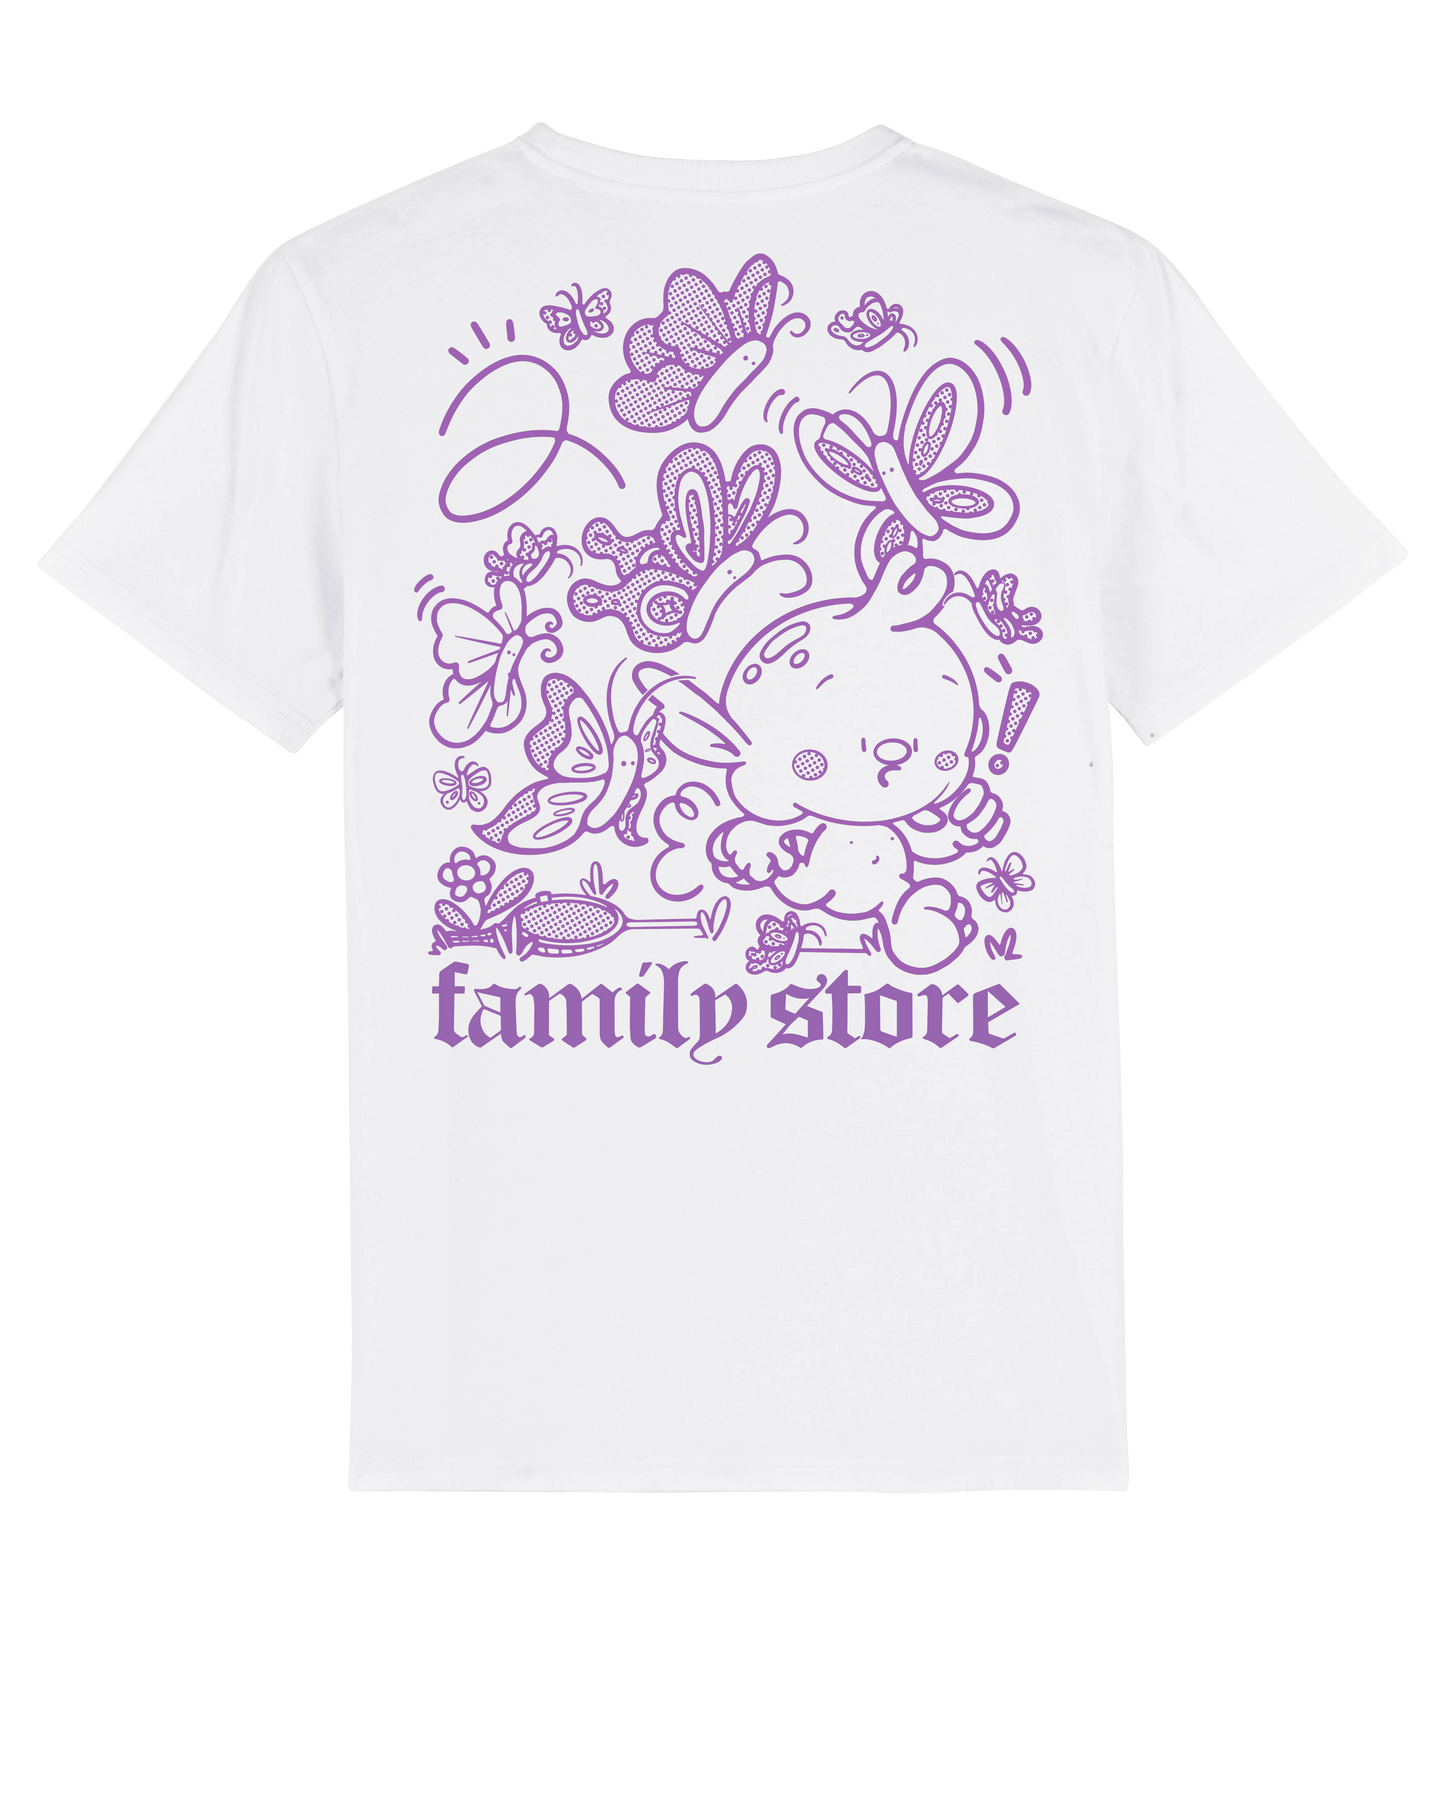 Family Store White & Purple Tee by Bobbi Rae x FS